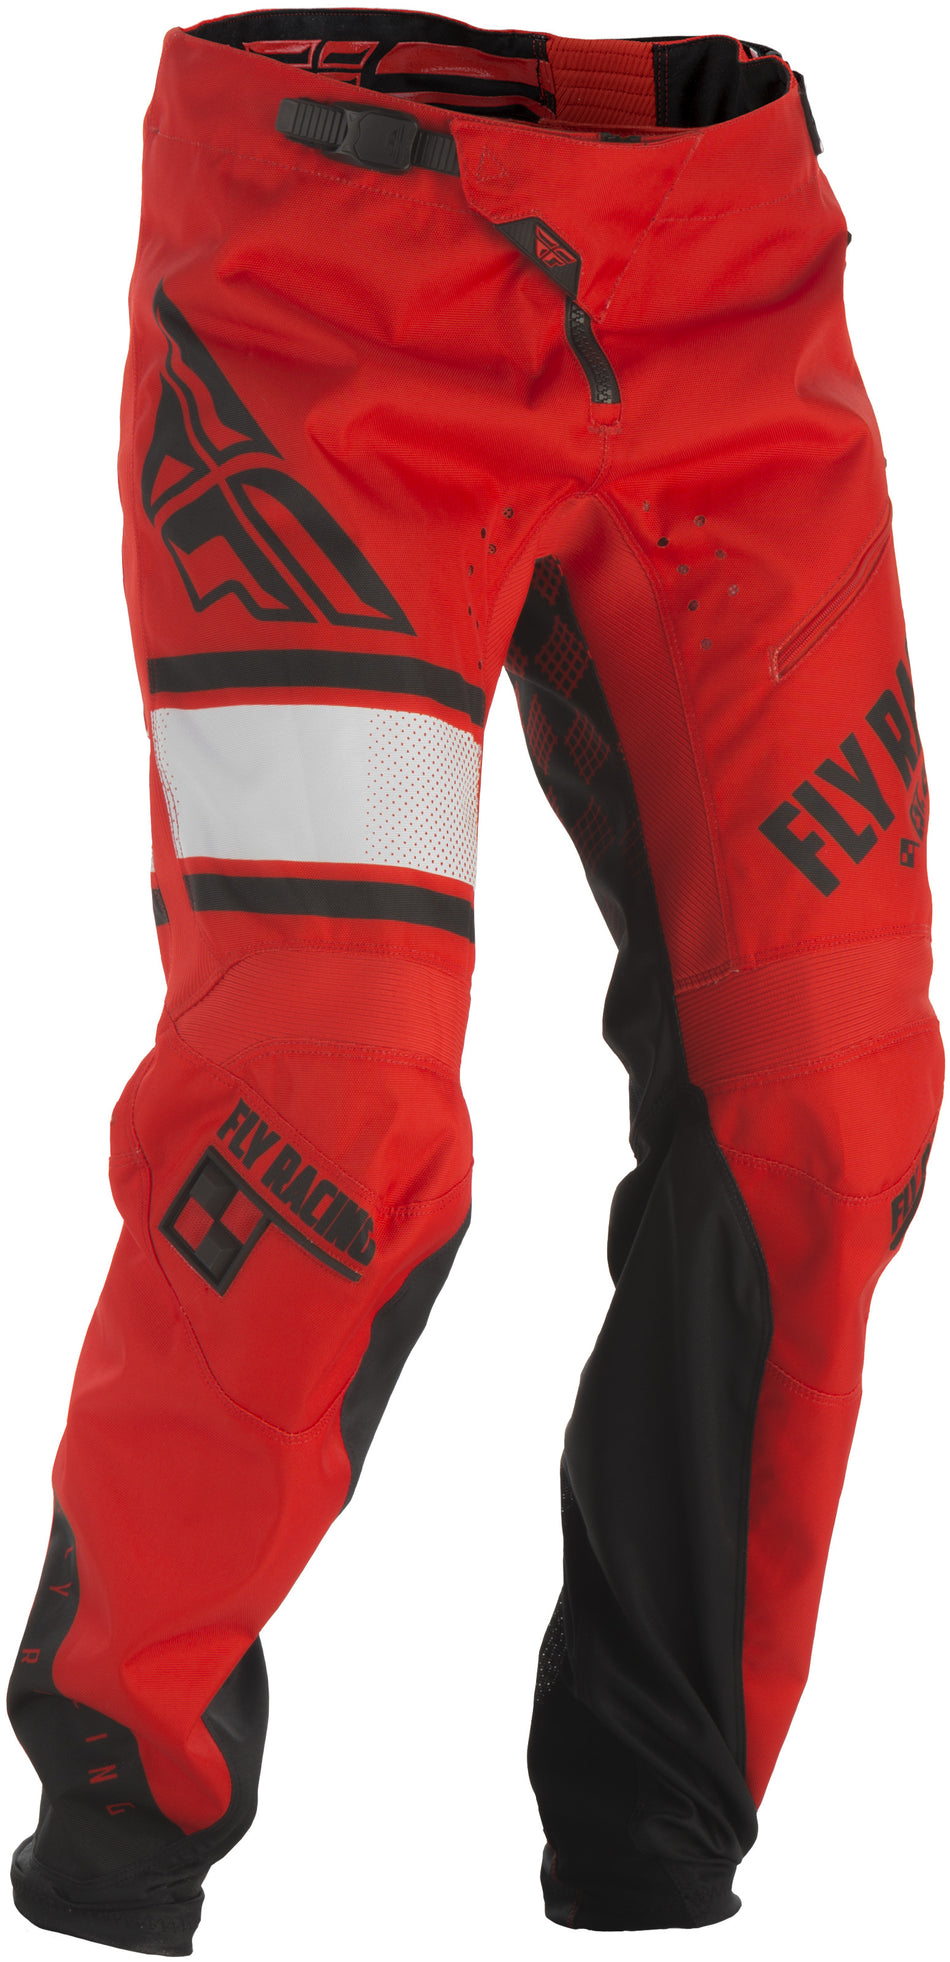 FLY RACING Kinetic Era Bicycle Pants Red/Black Sz 28 371-02228